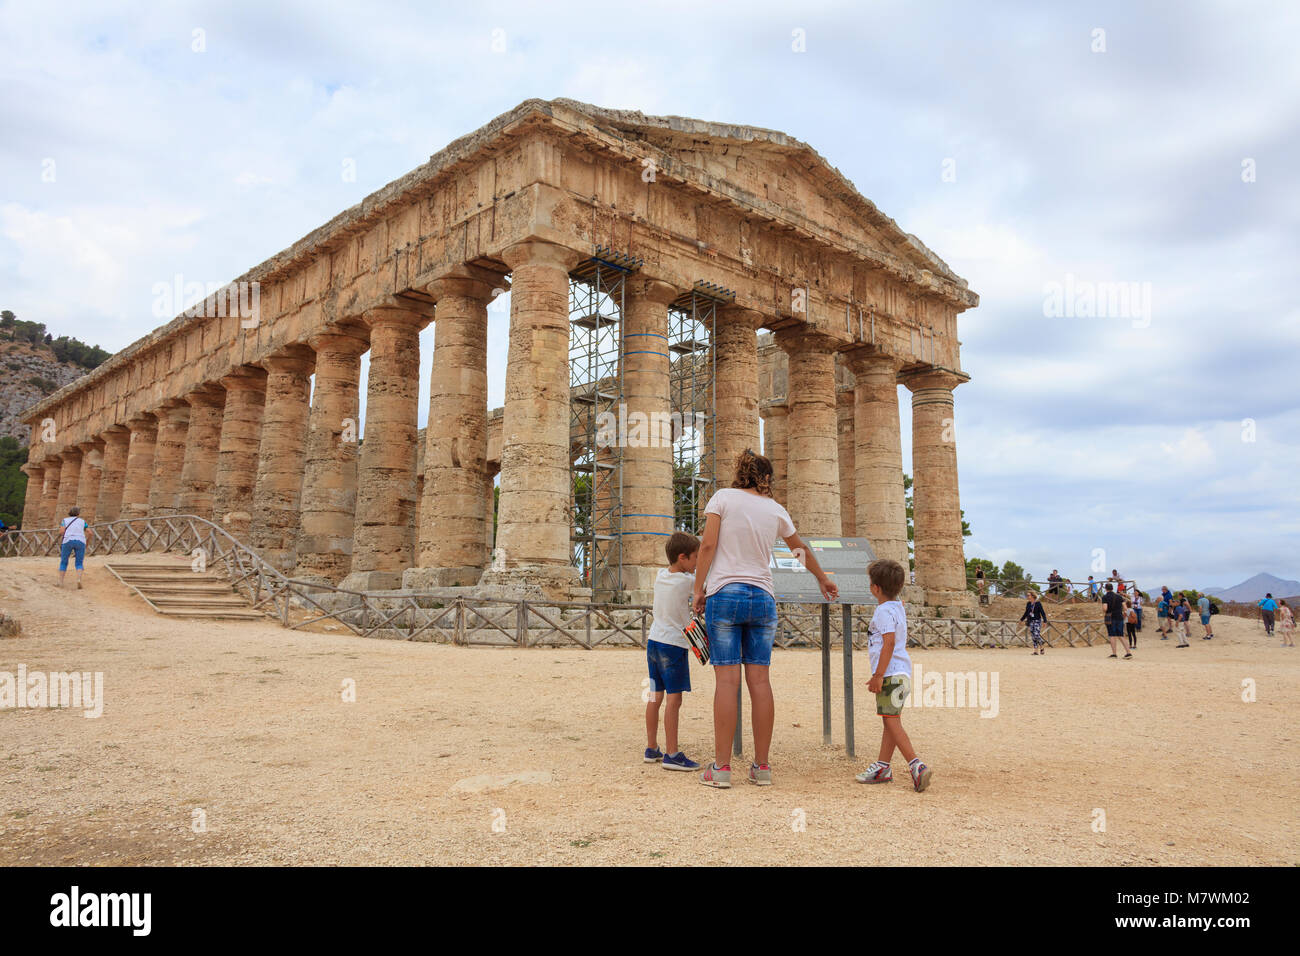 Temple of Segesta, Calatafimi, province of Trapani, Sicily, Italy Stock Photo